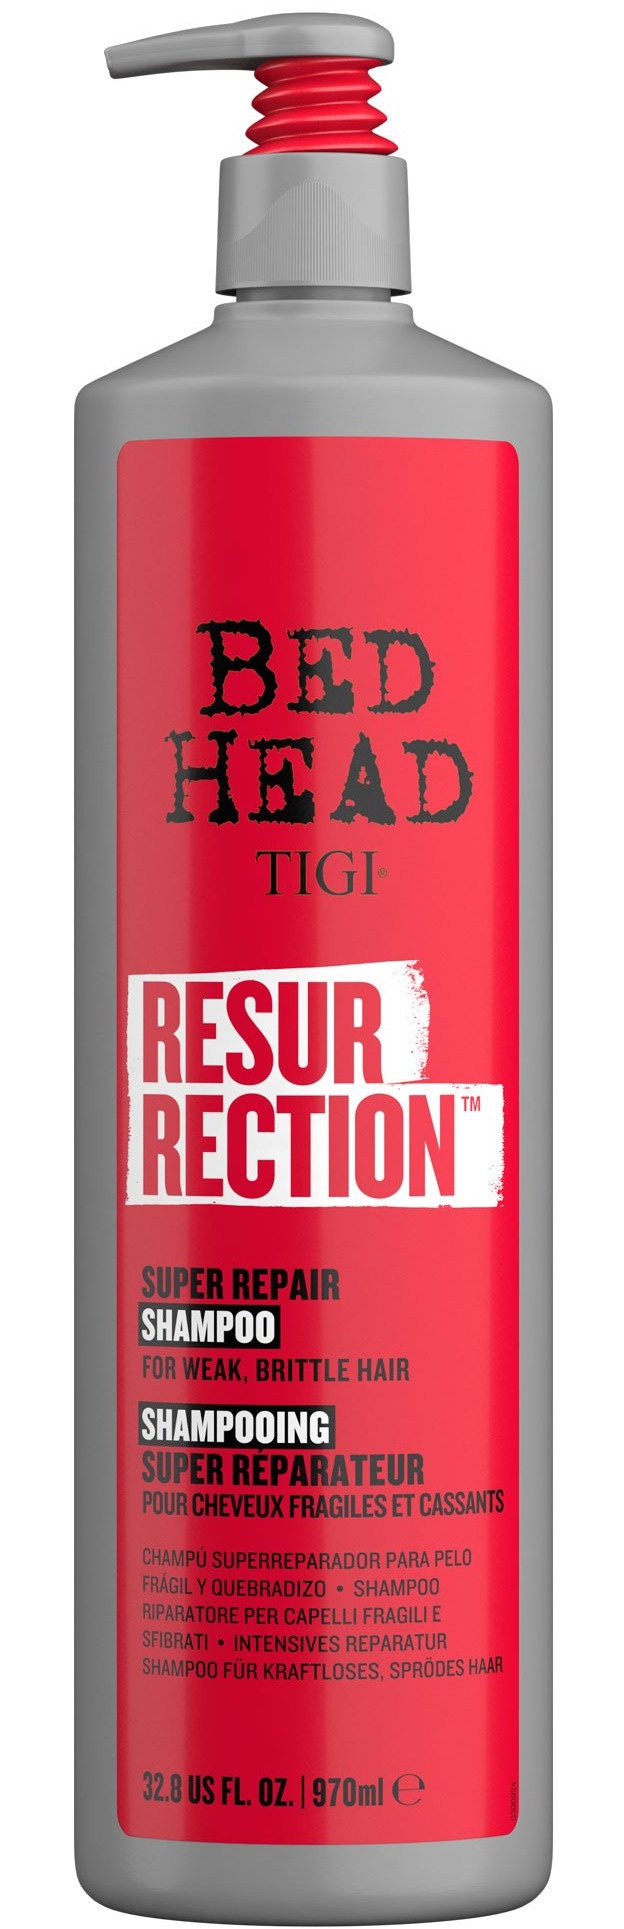 Bedhead Resurrection Super Repair Shampoo